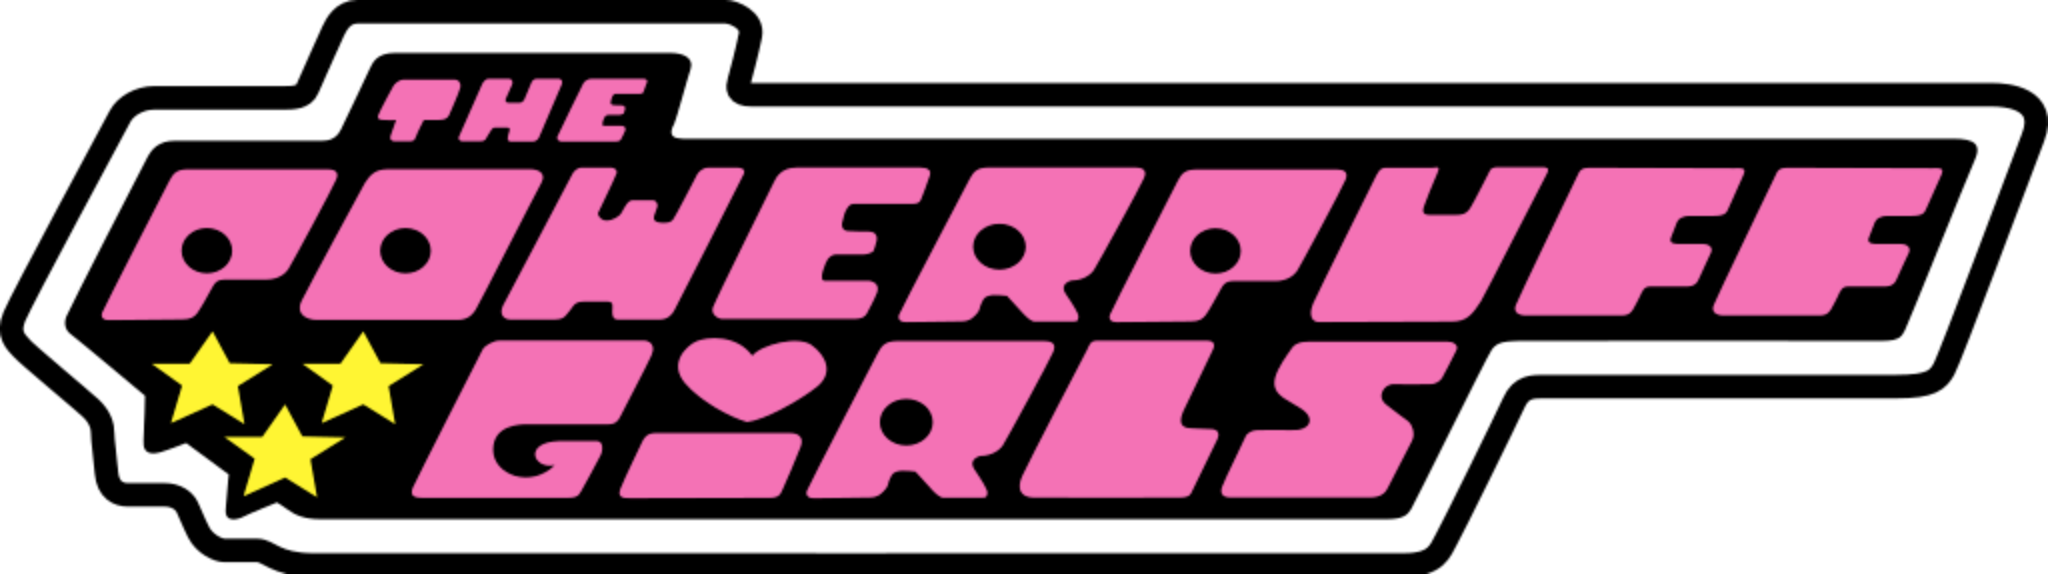 The Powerpuff Girls Volume 1 (4 DVDs Box Set)